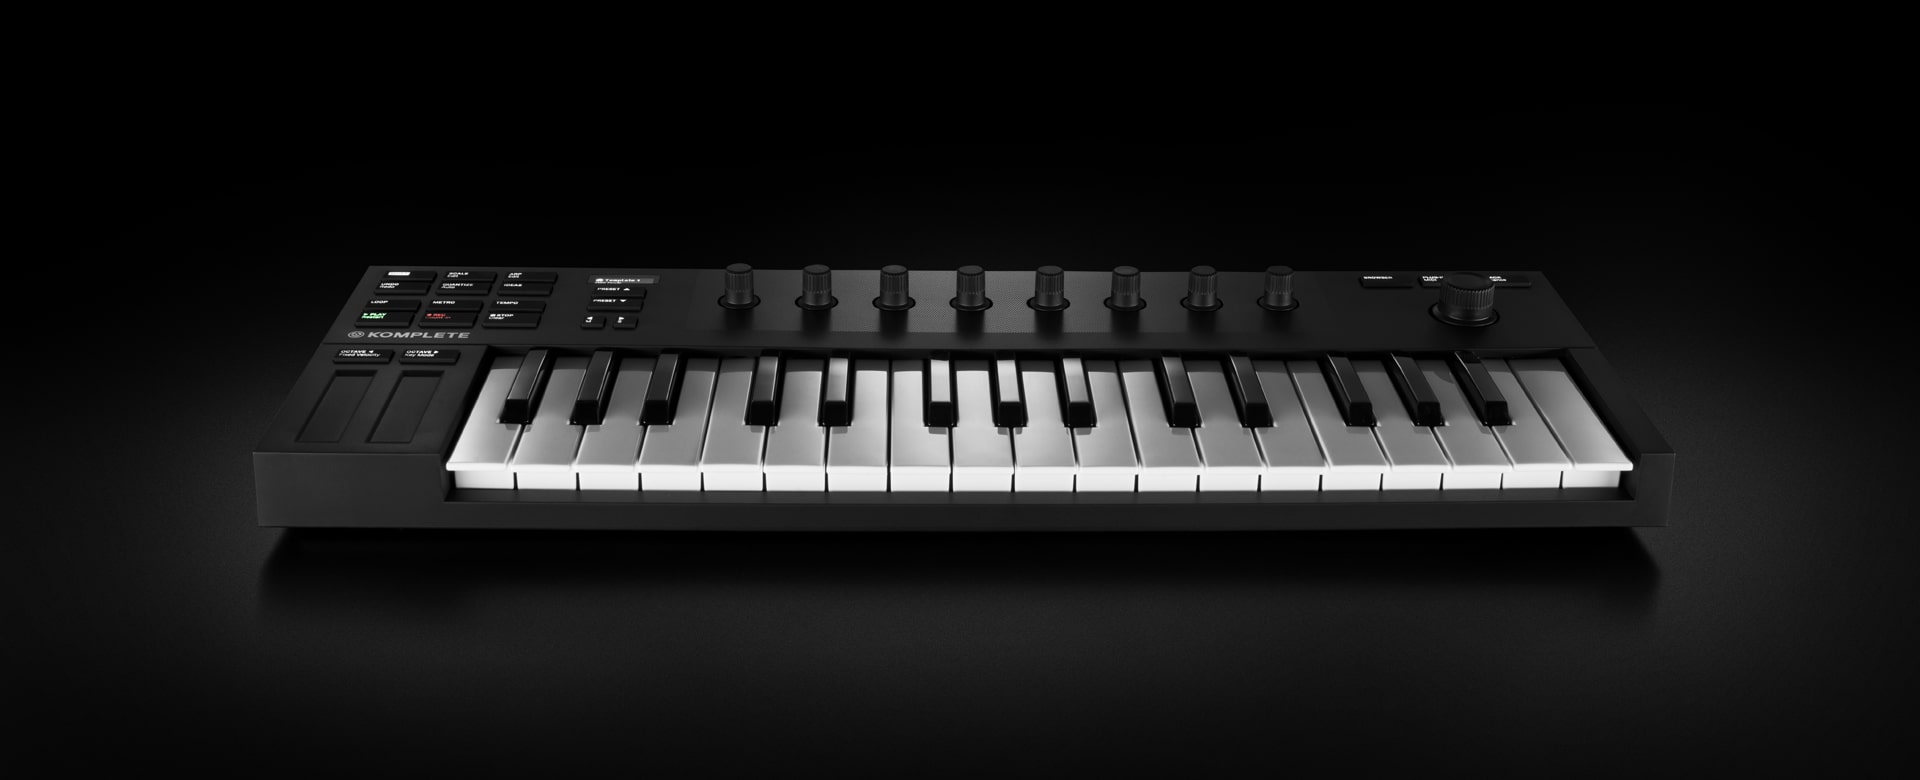 native instruments komplete kontrol m32 micro keyboard controller